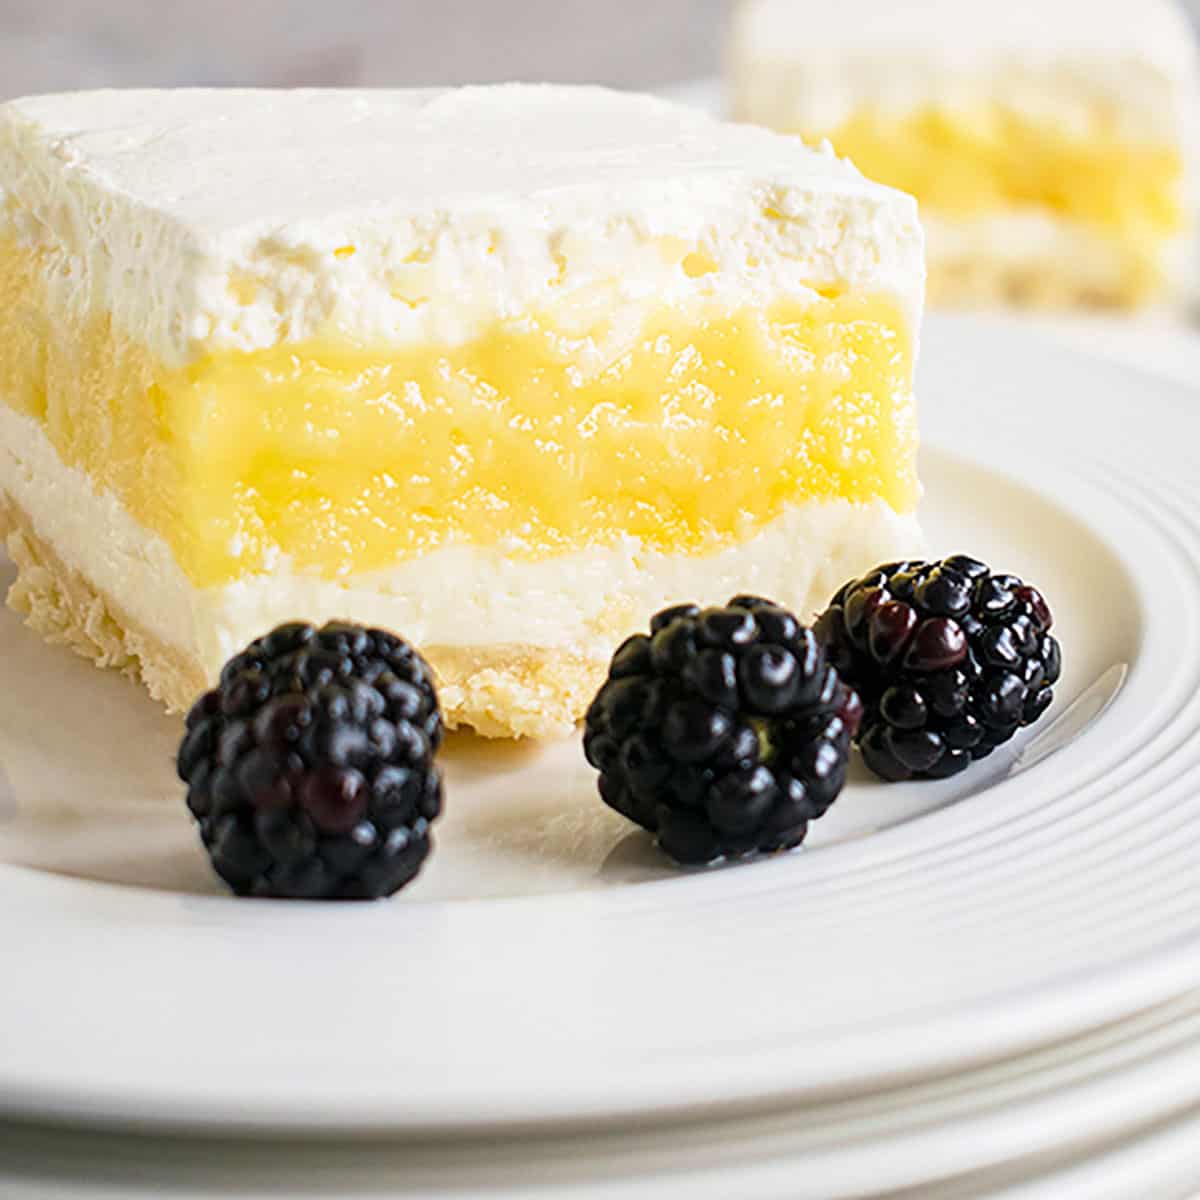 Lemon Lush: the perfect one-pan dessert for potlucks or gatherings!